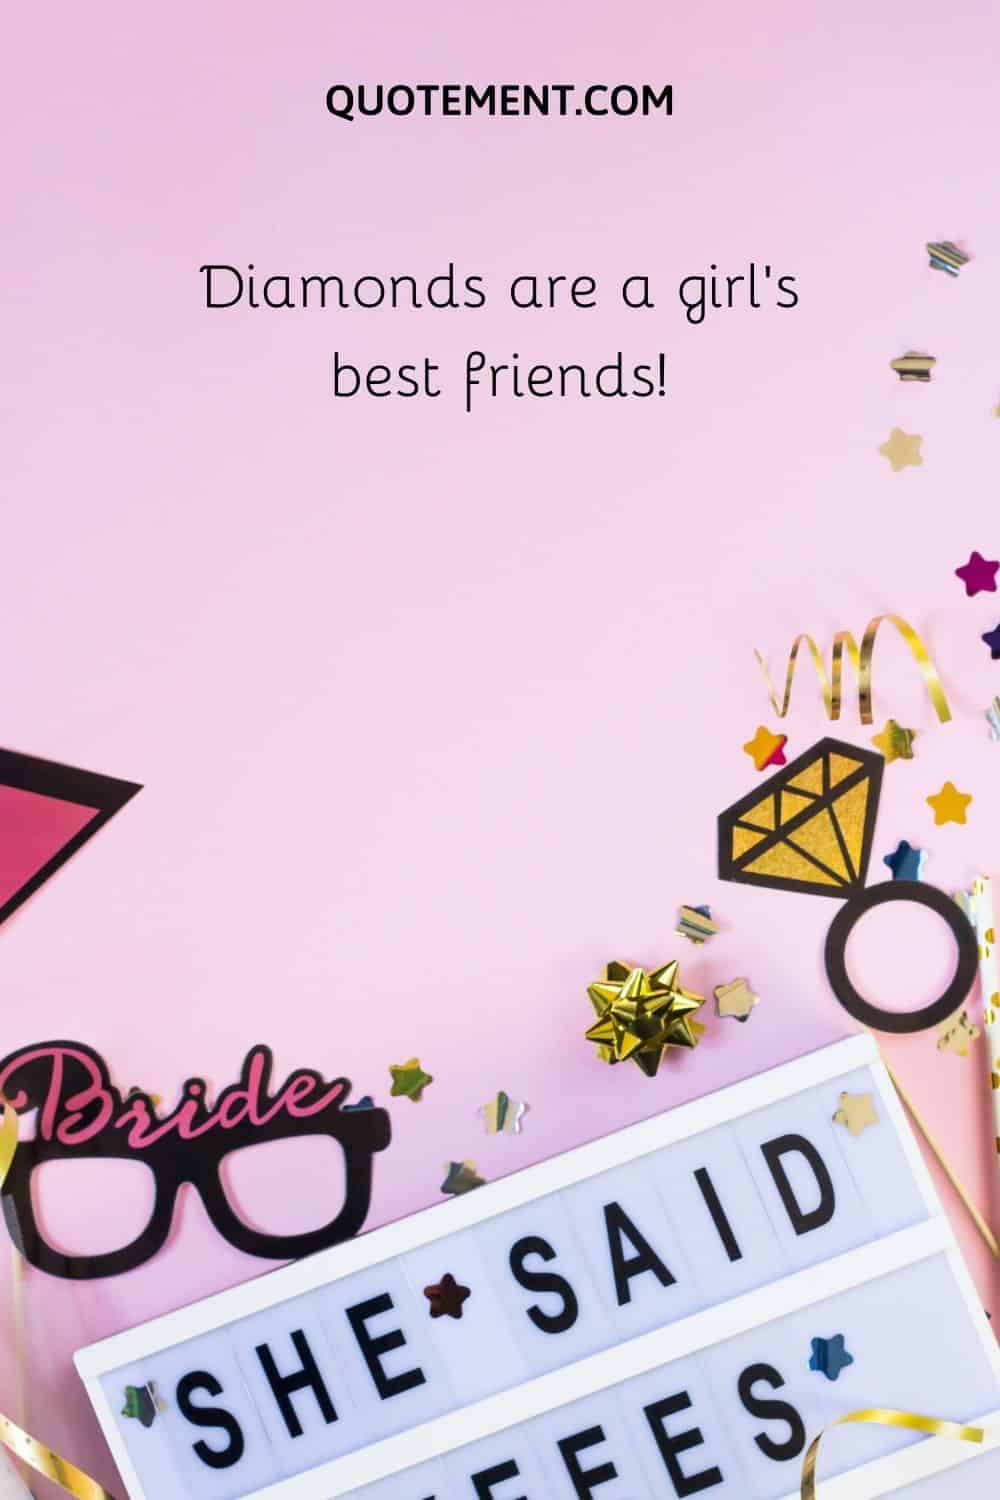 Diamonds are a girl’s best friends!